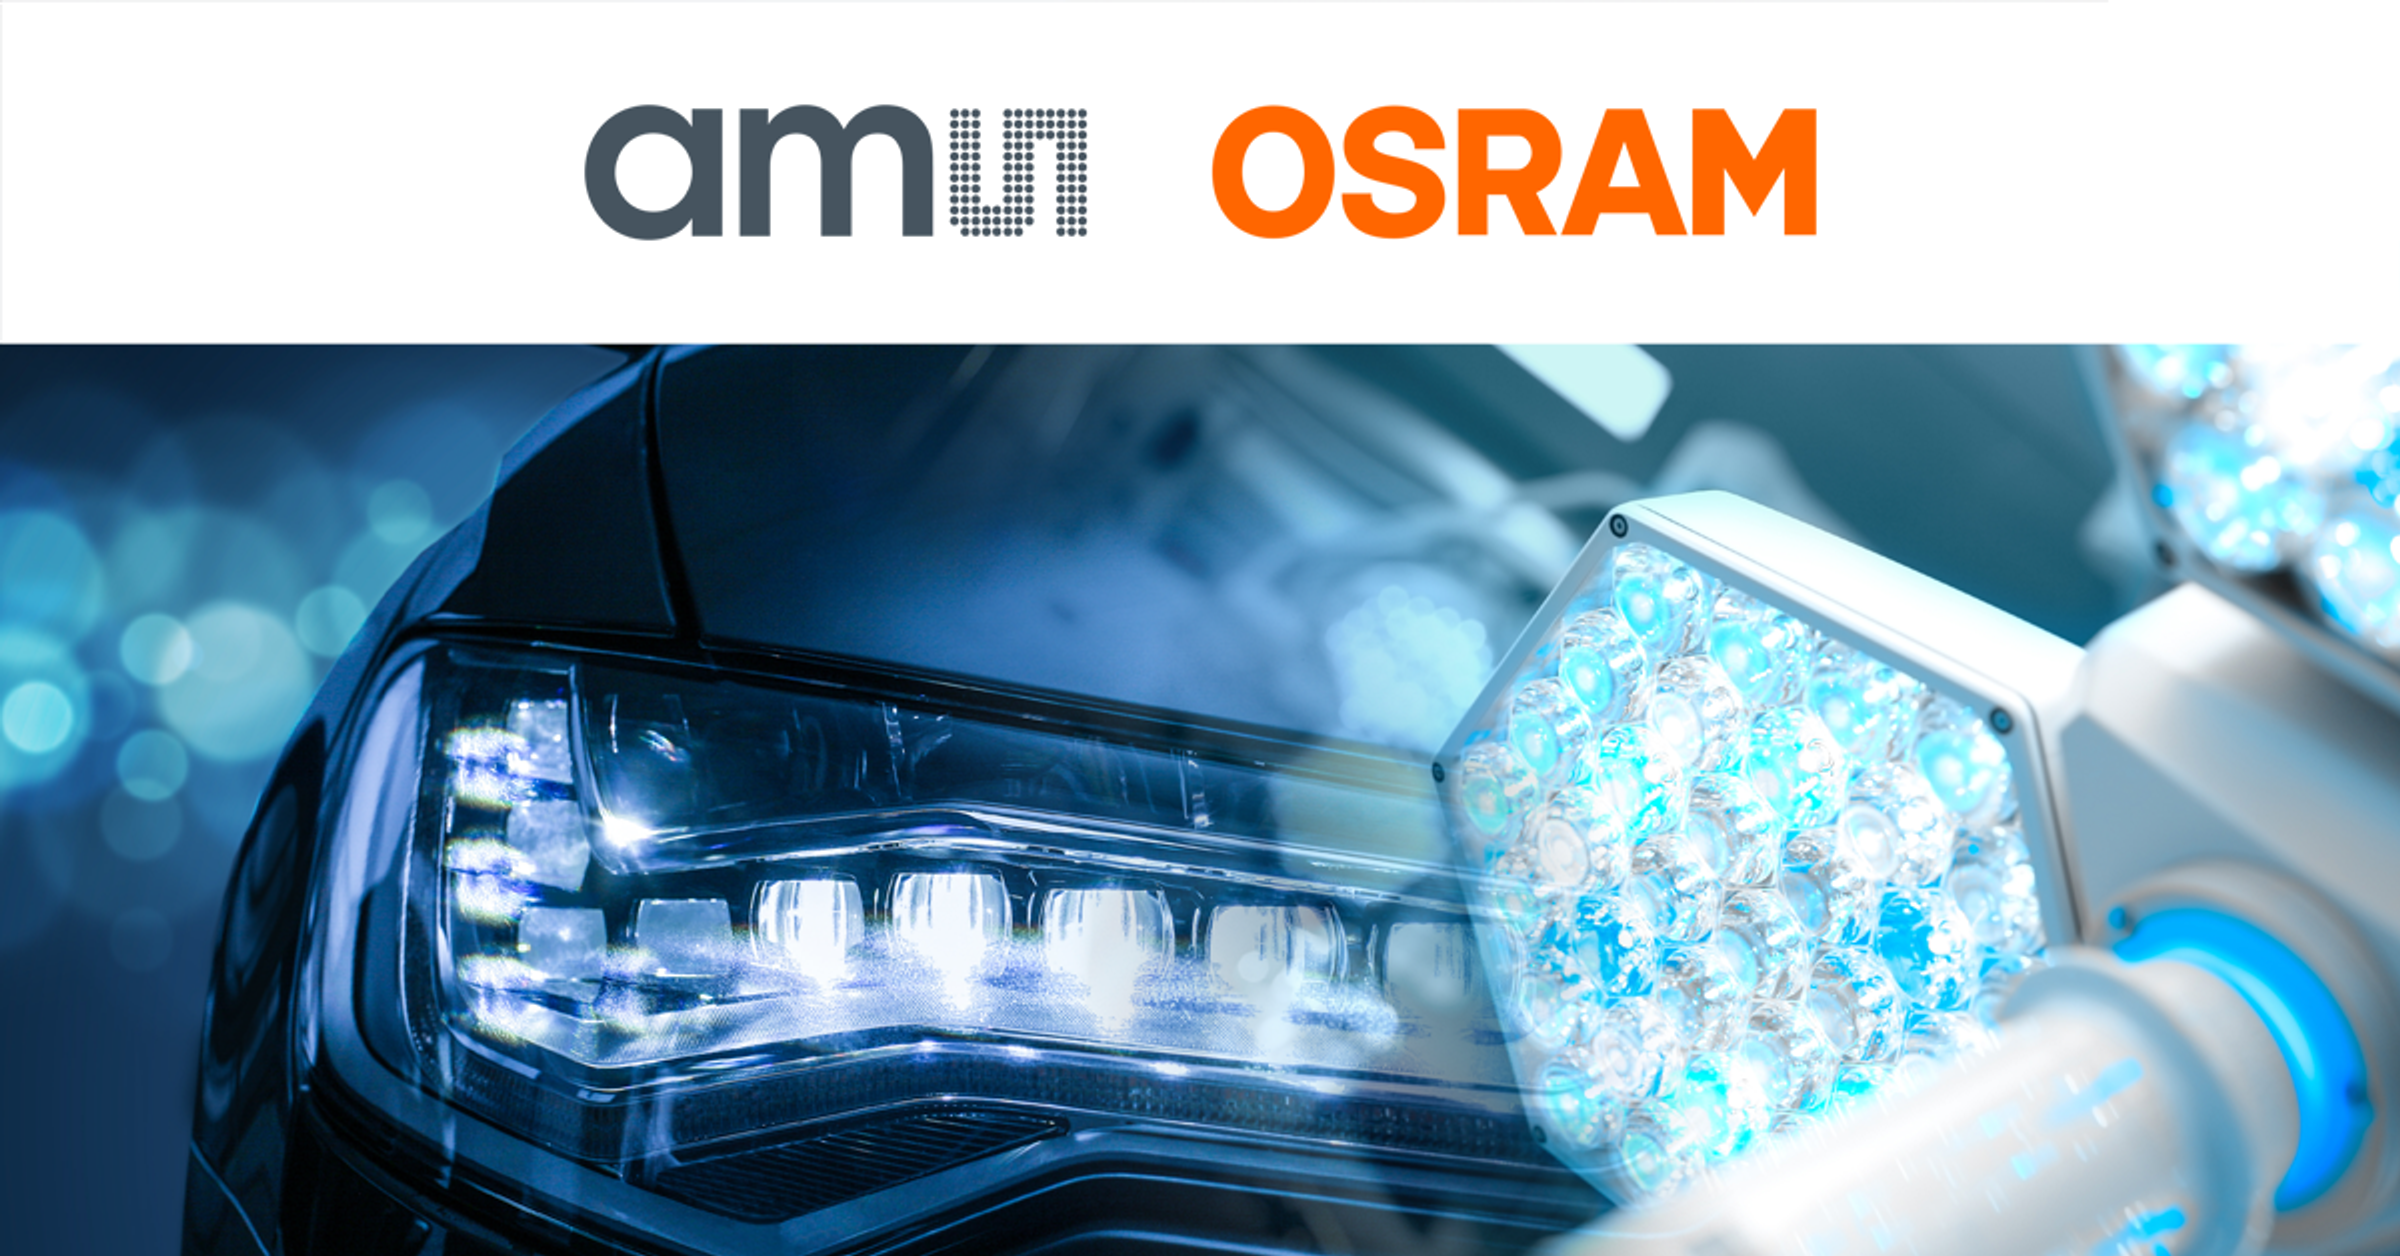 Rochester Electronics - ams OSRAM